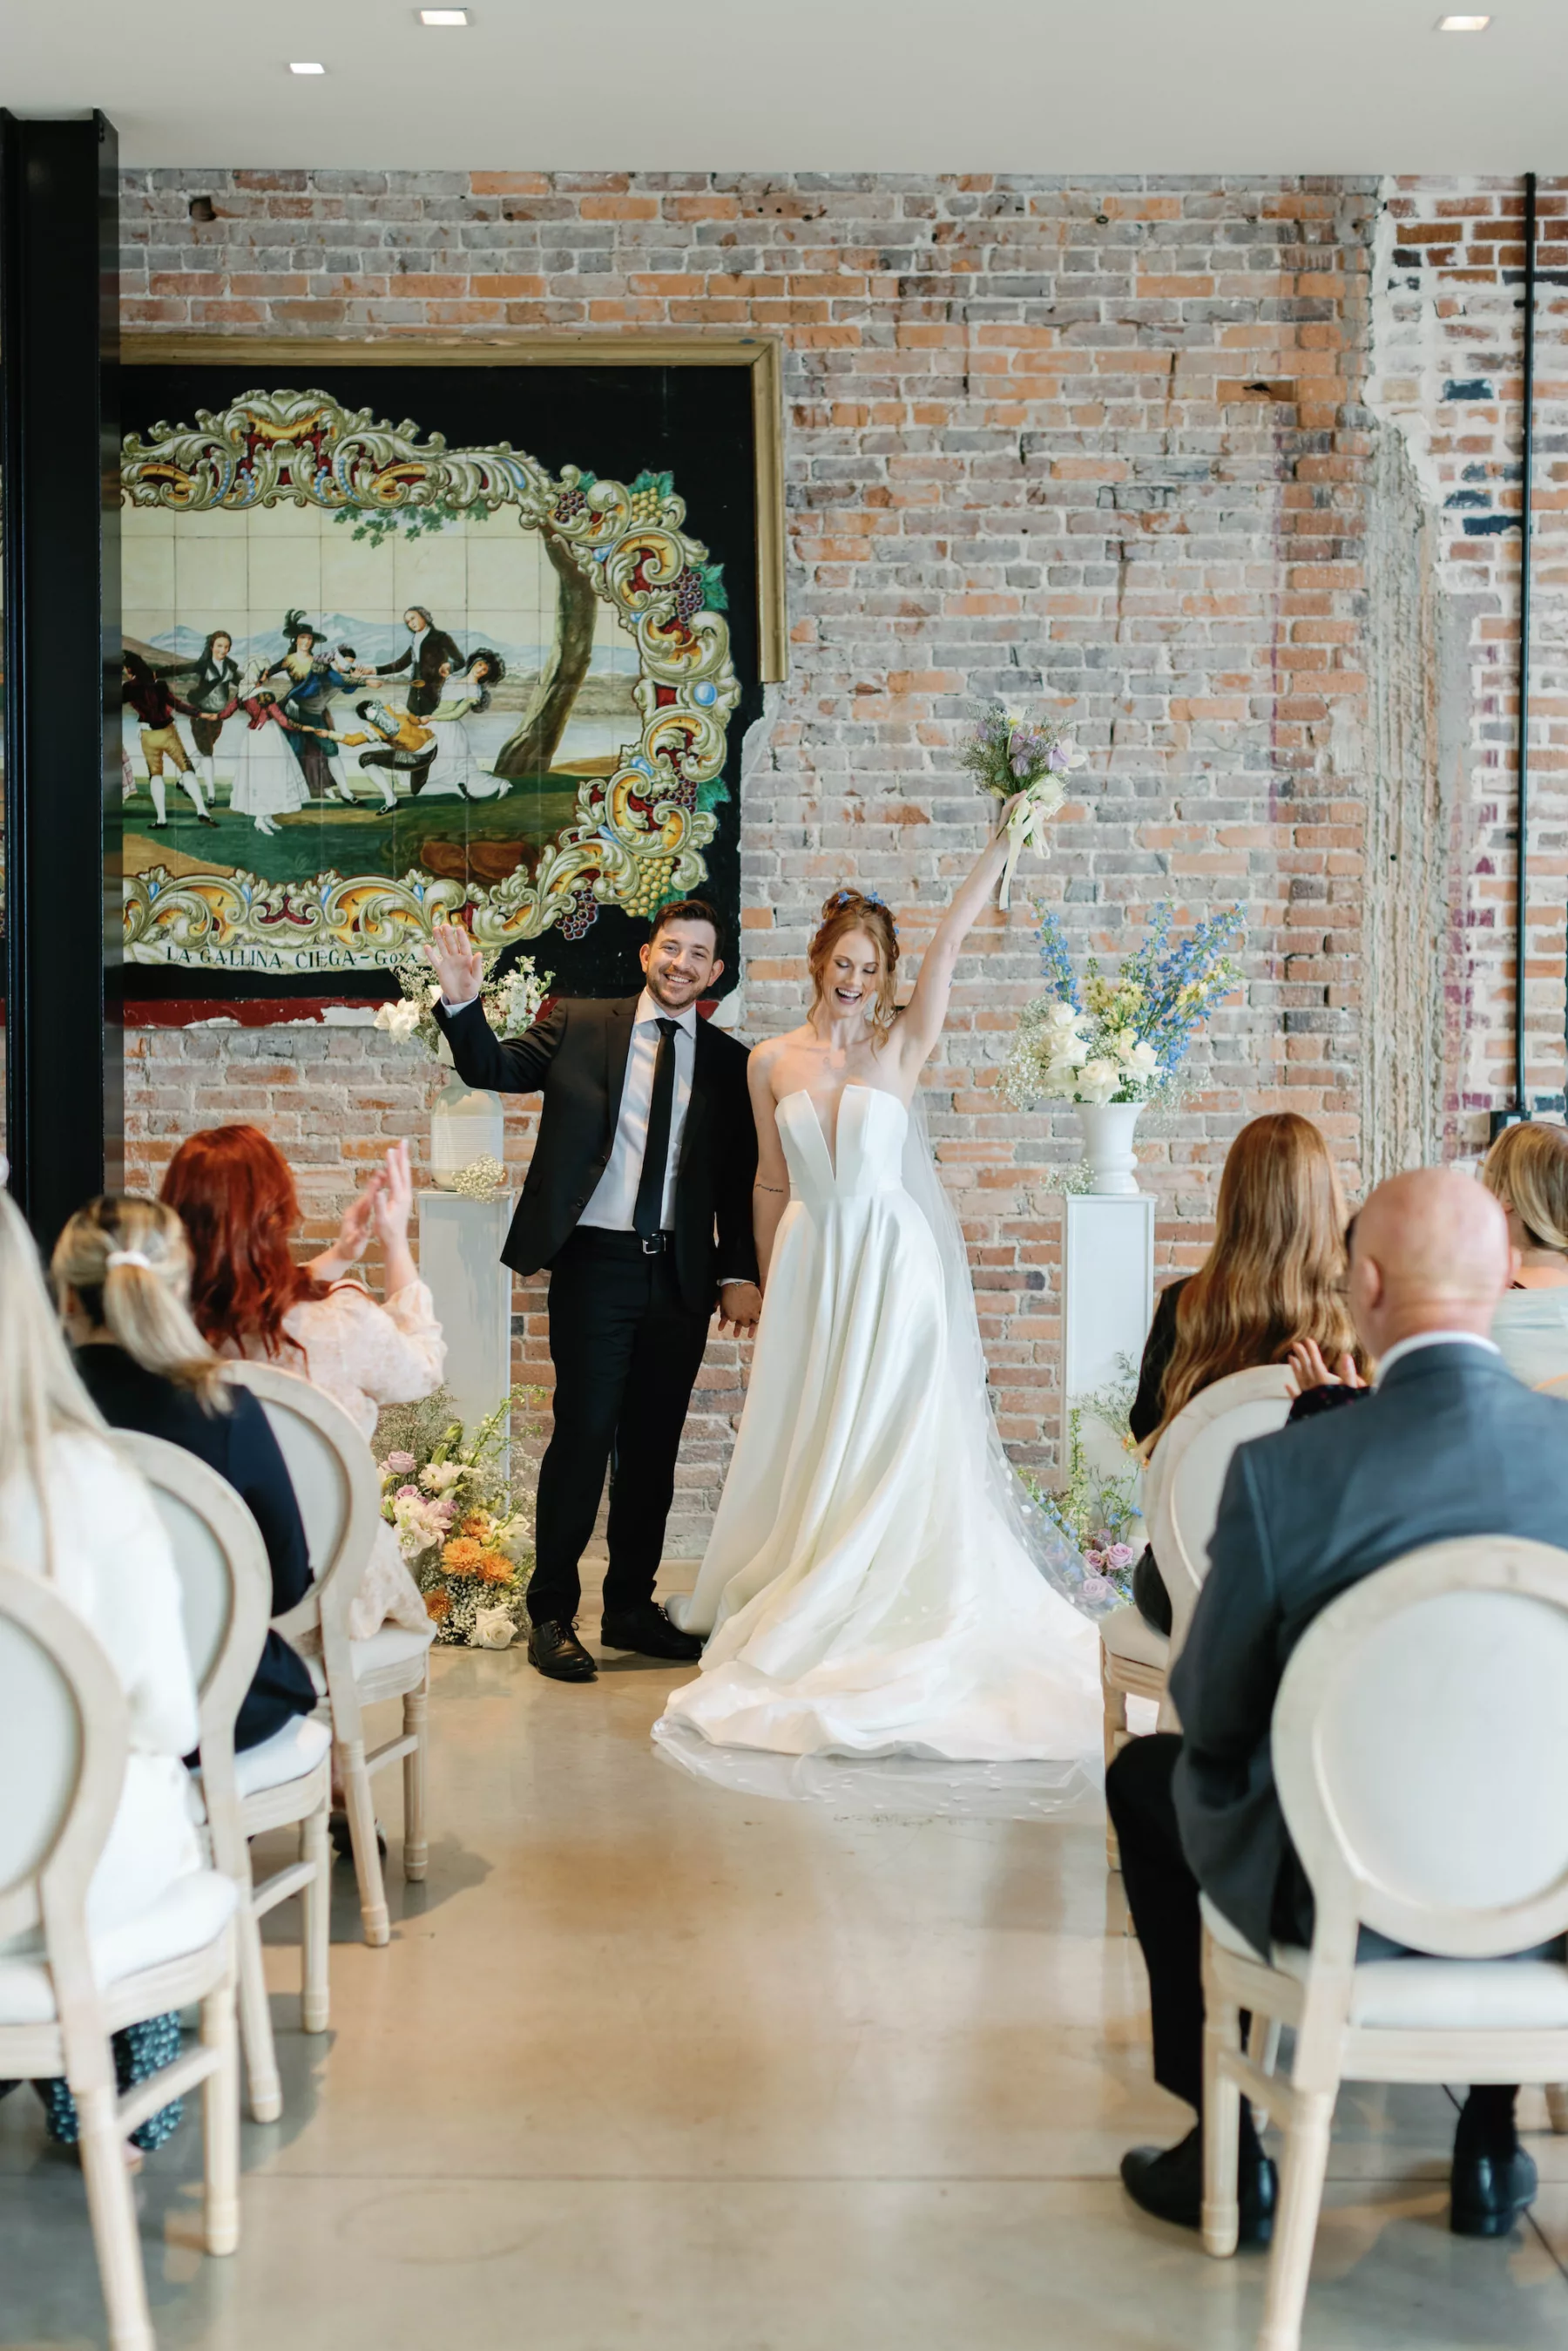 Bride and Groom Just Married Wedding Portrait | Tampa Bay Event Venue Hotel Haya